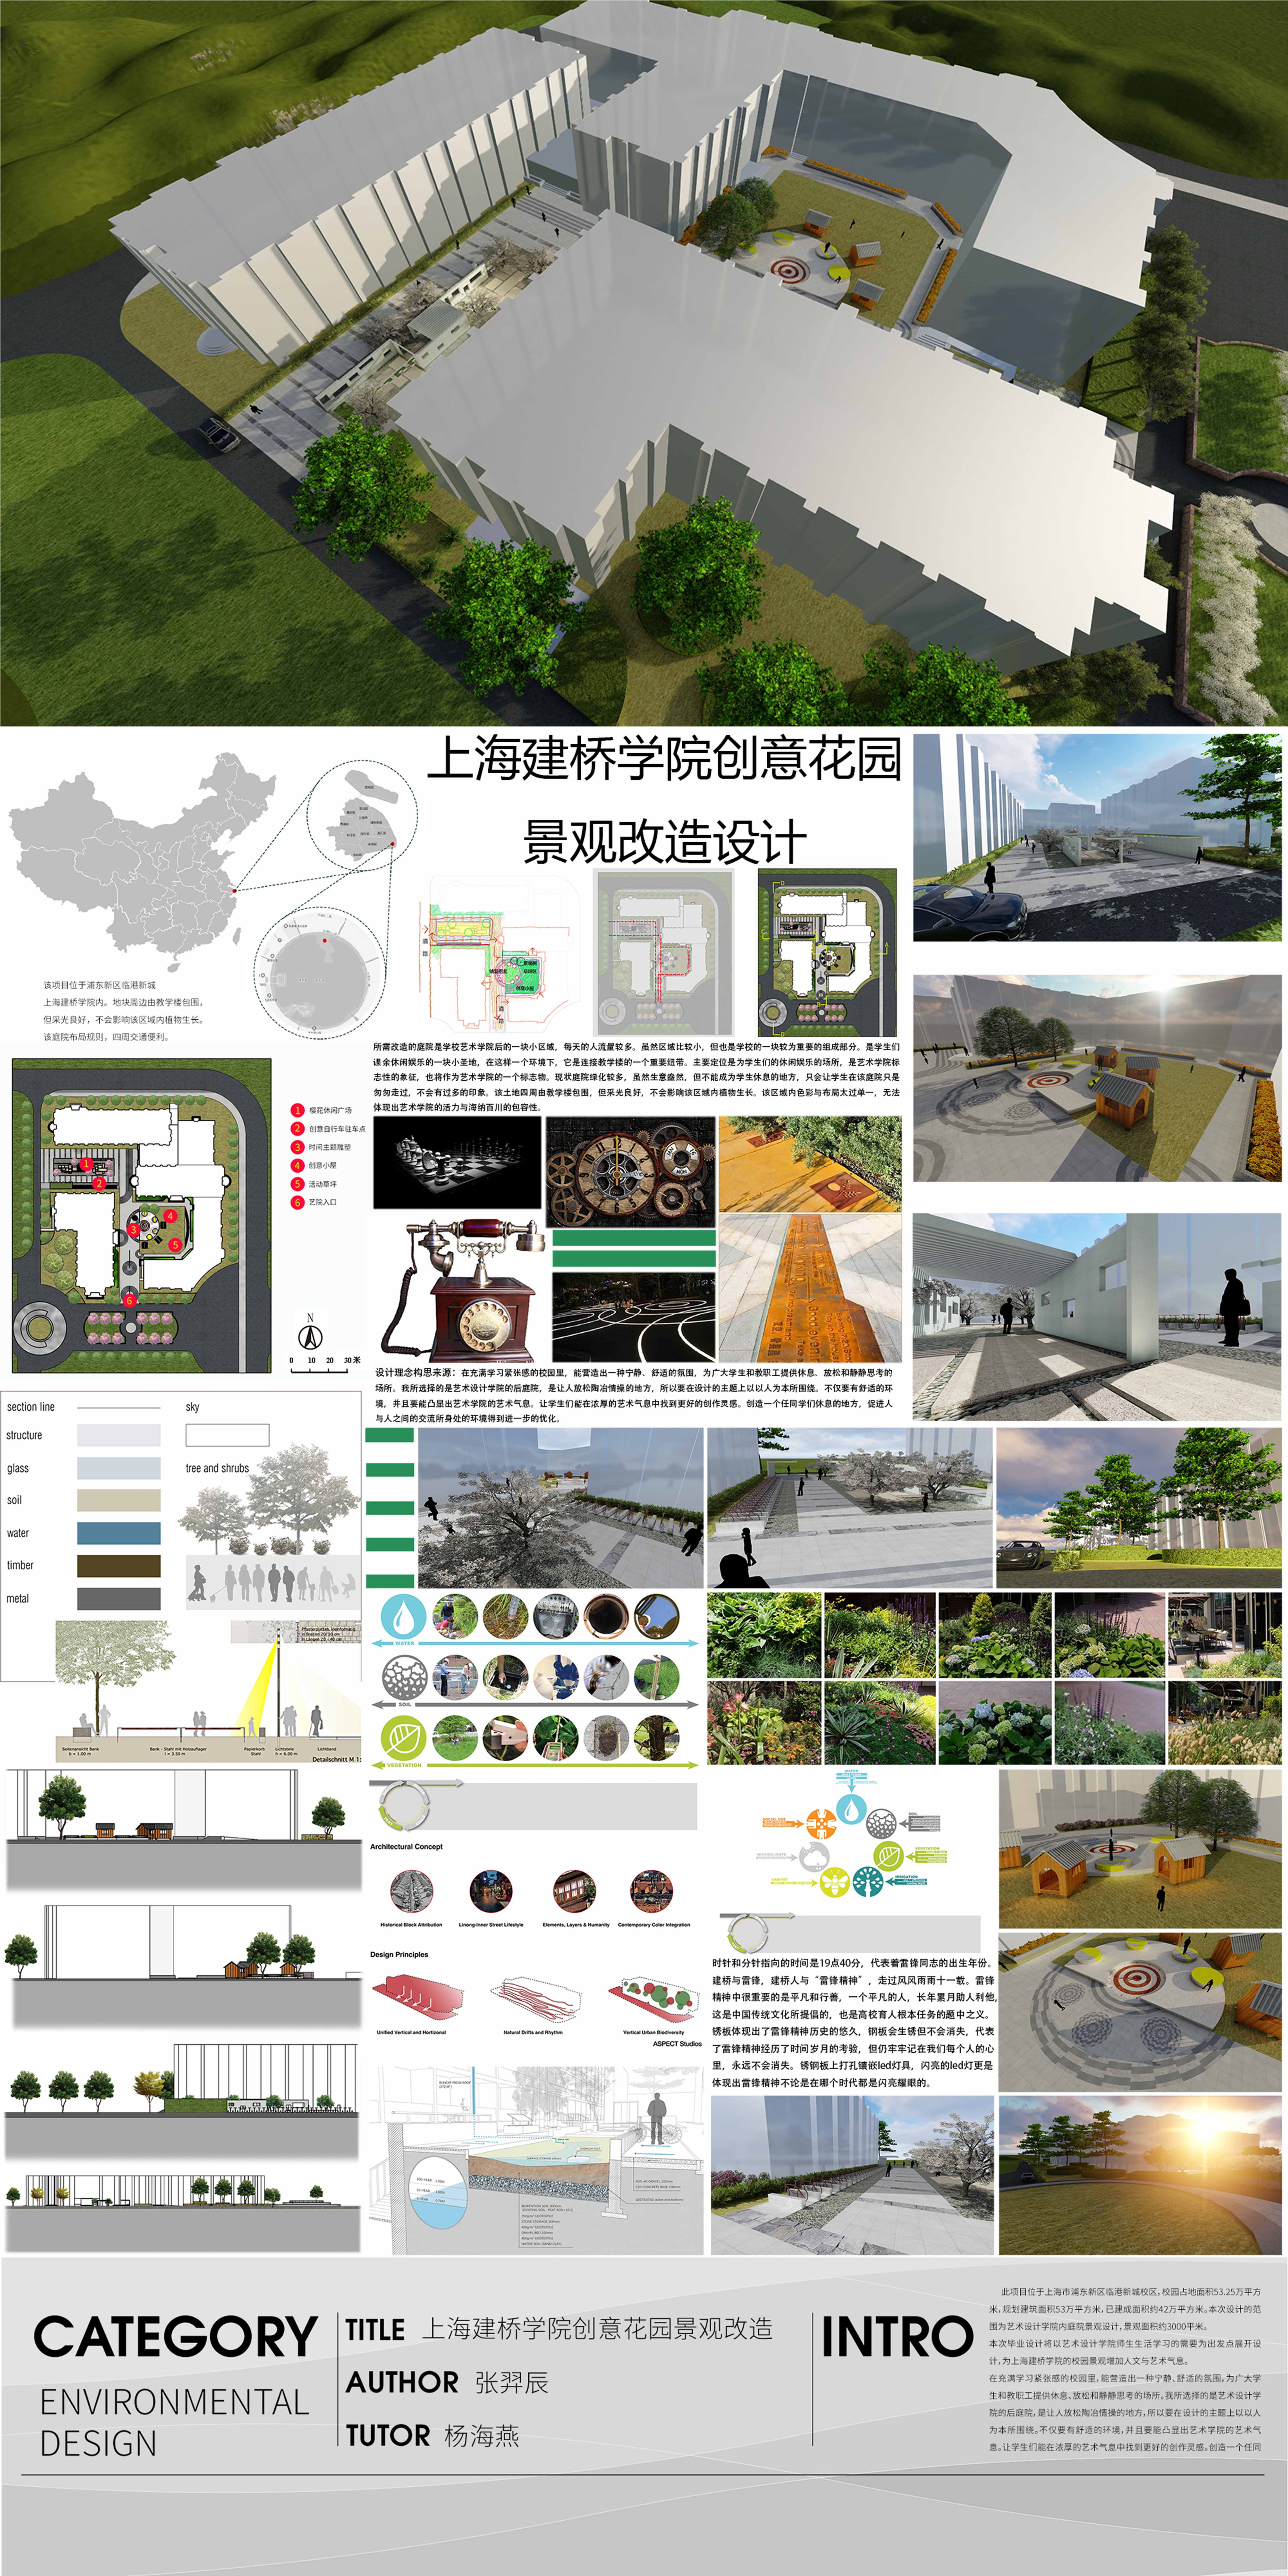 《BETVLCTOR伟德官方网站创意花园景观改造设计》-张羿辰